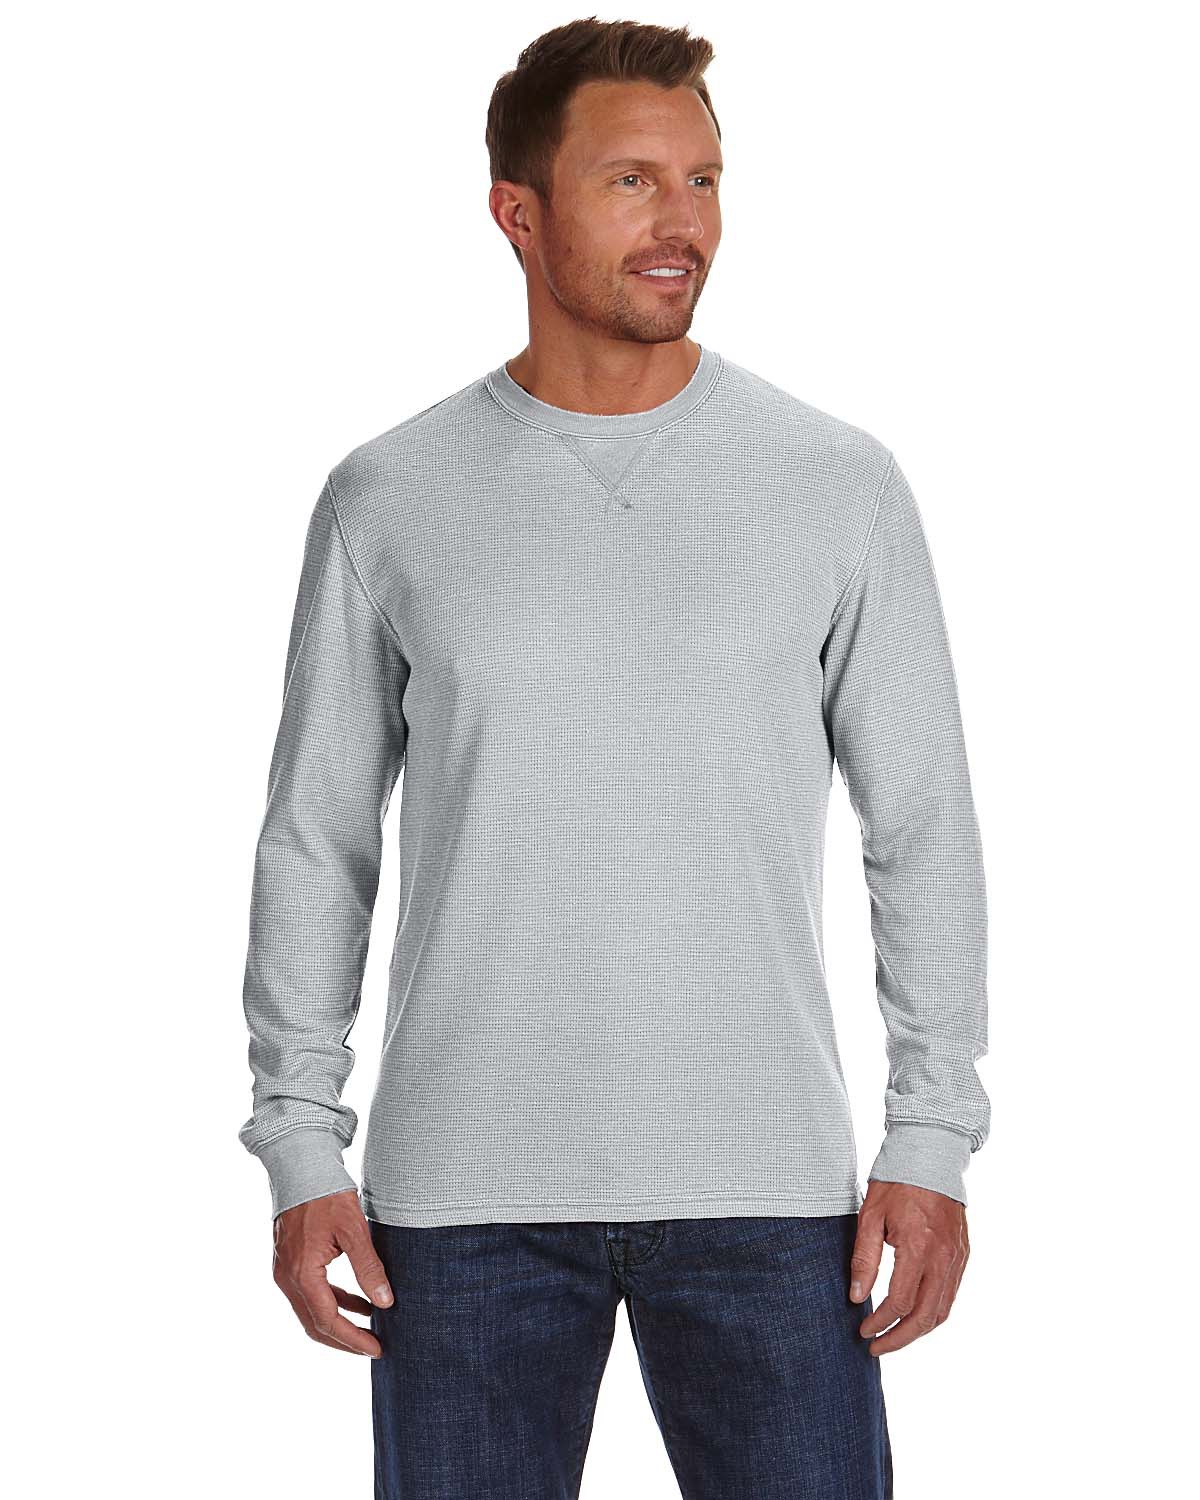 'J America JA8241 Men's Vintage Zen Thermal Long-Sleeve T-Shirt'